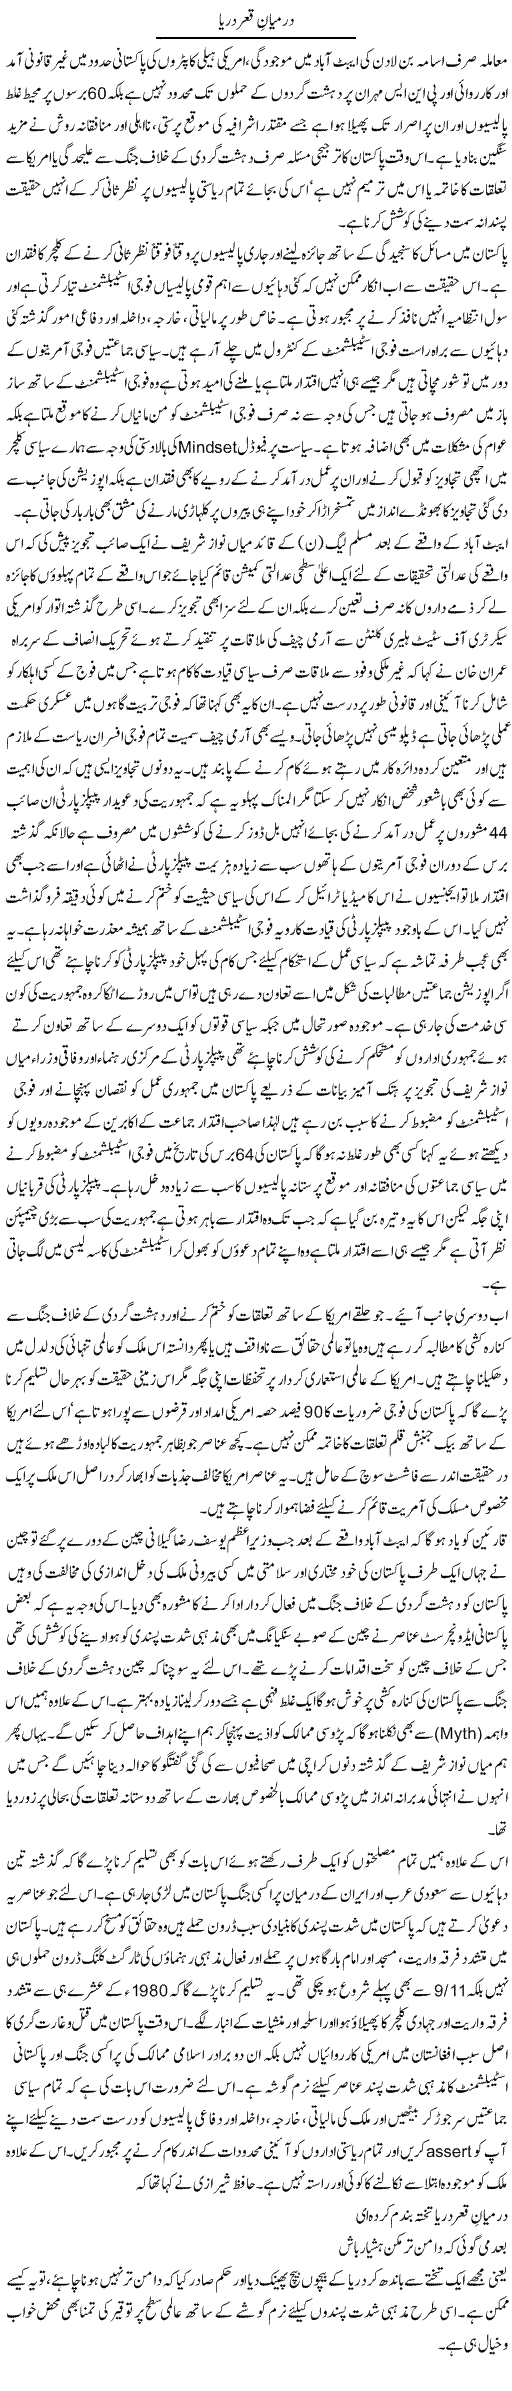 Pakistan America Express Column Muqtada Mansoor 2 June 2011